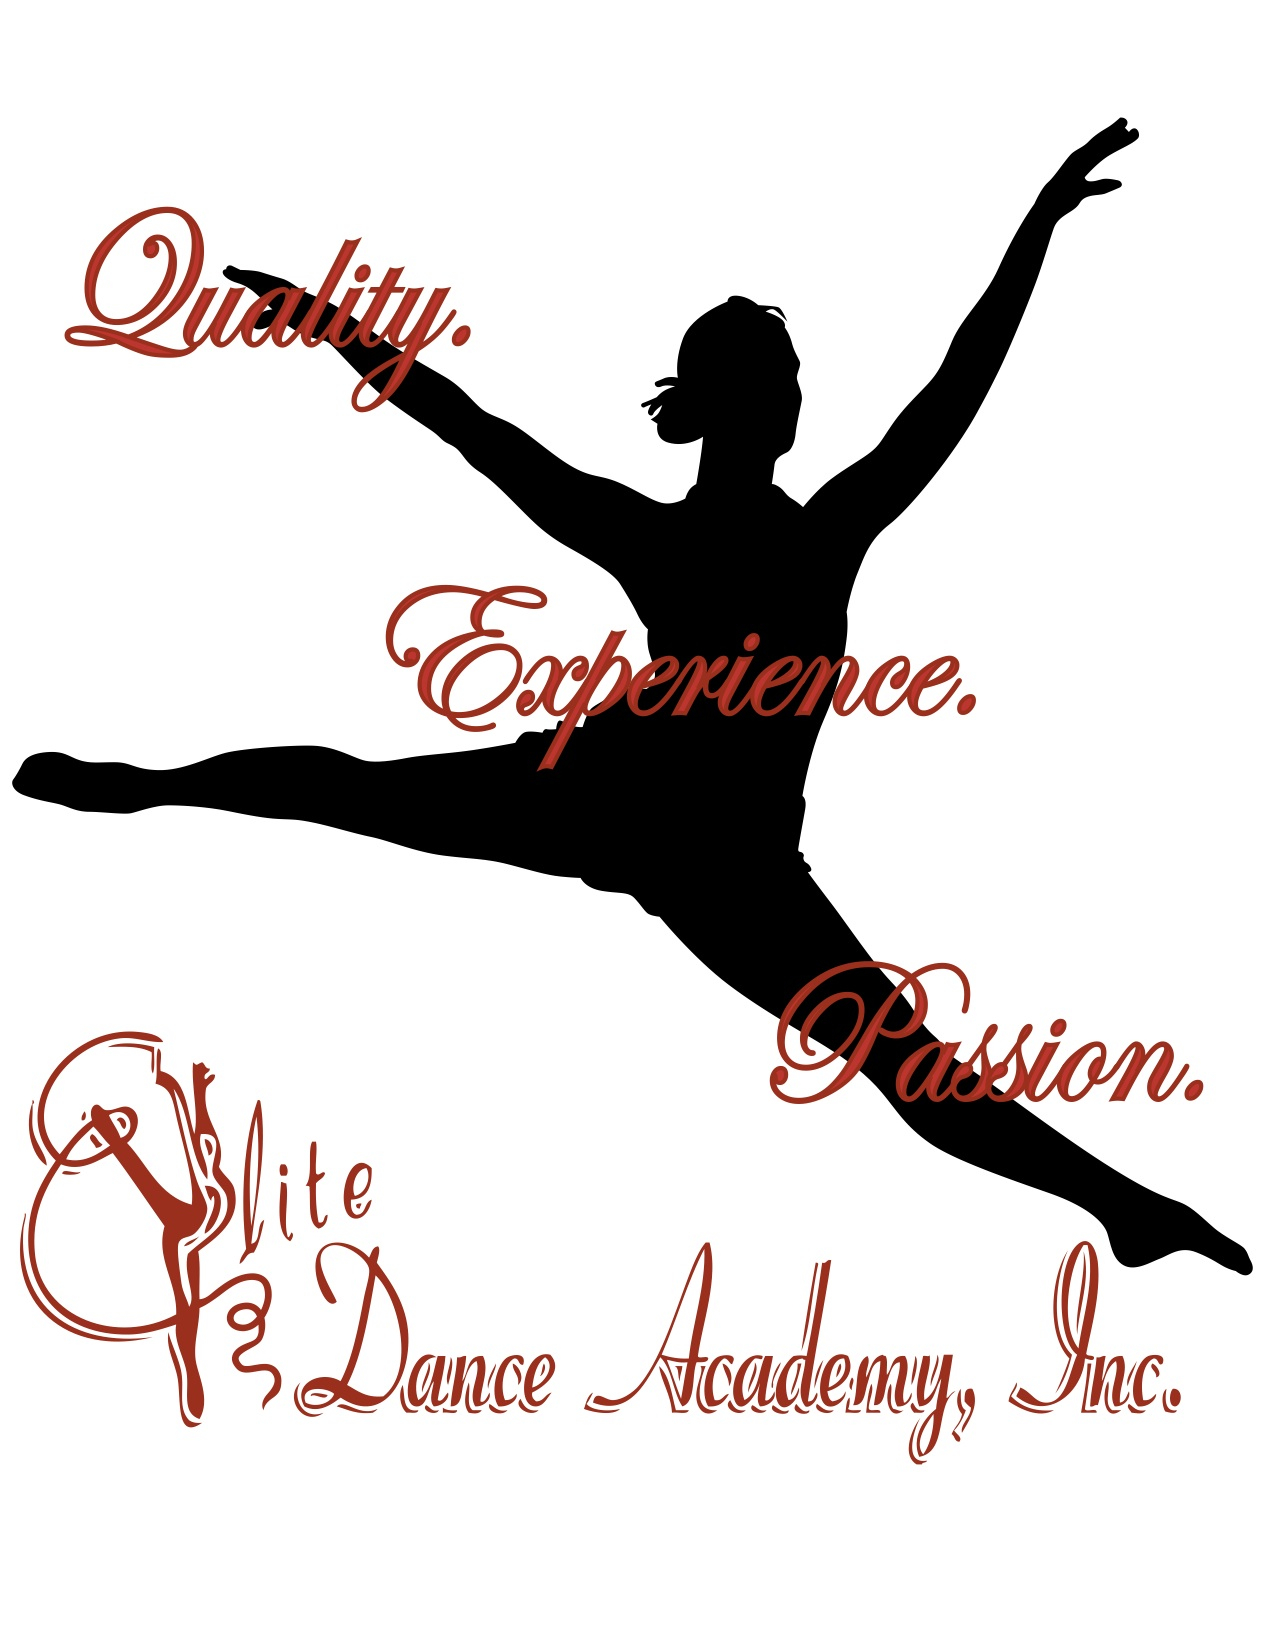 Fall Registration for 2011/12 Elite Dance Academy Season